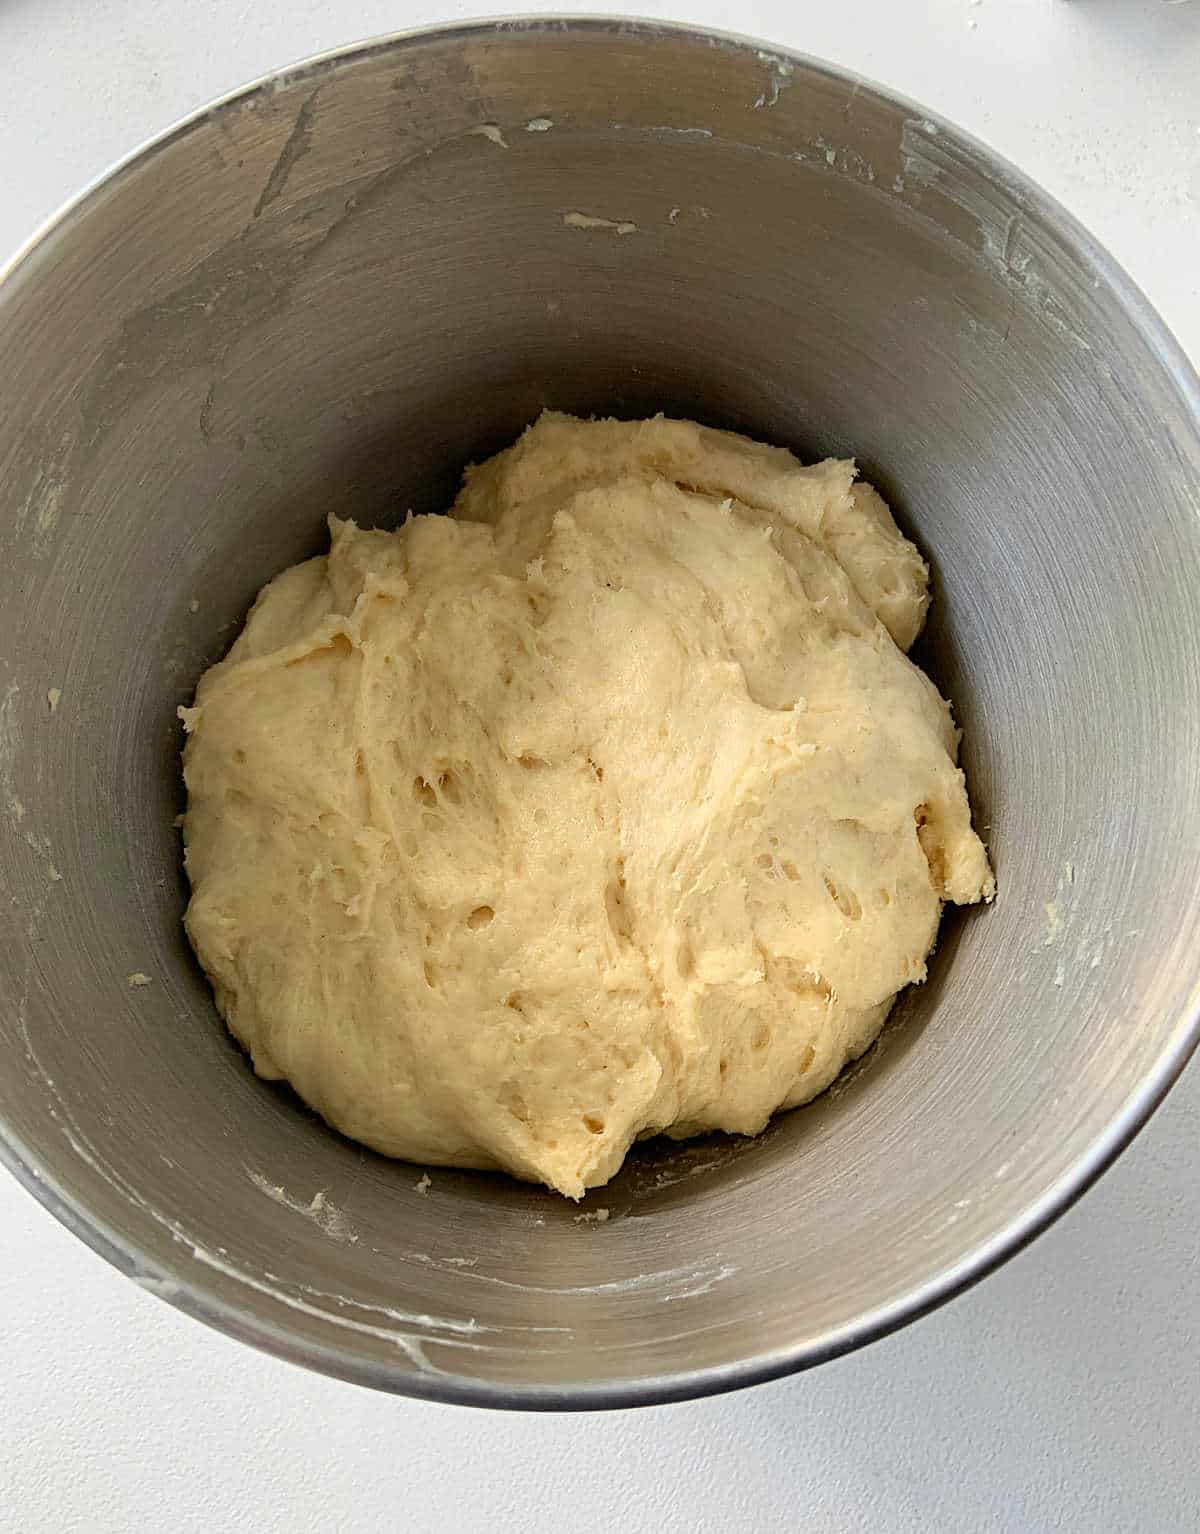 Pandoro dough inside a metal bowl